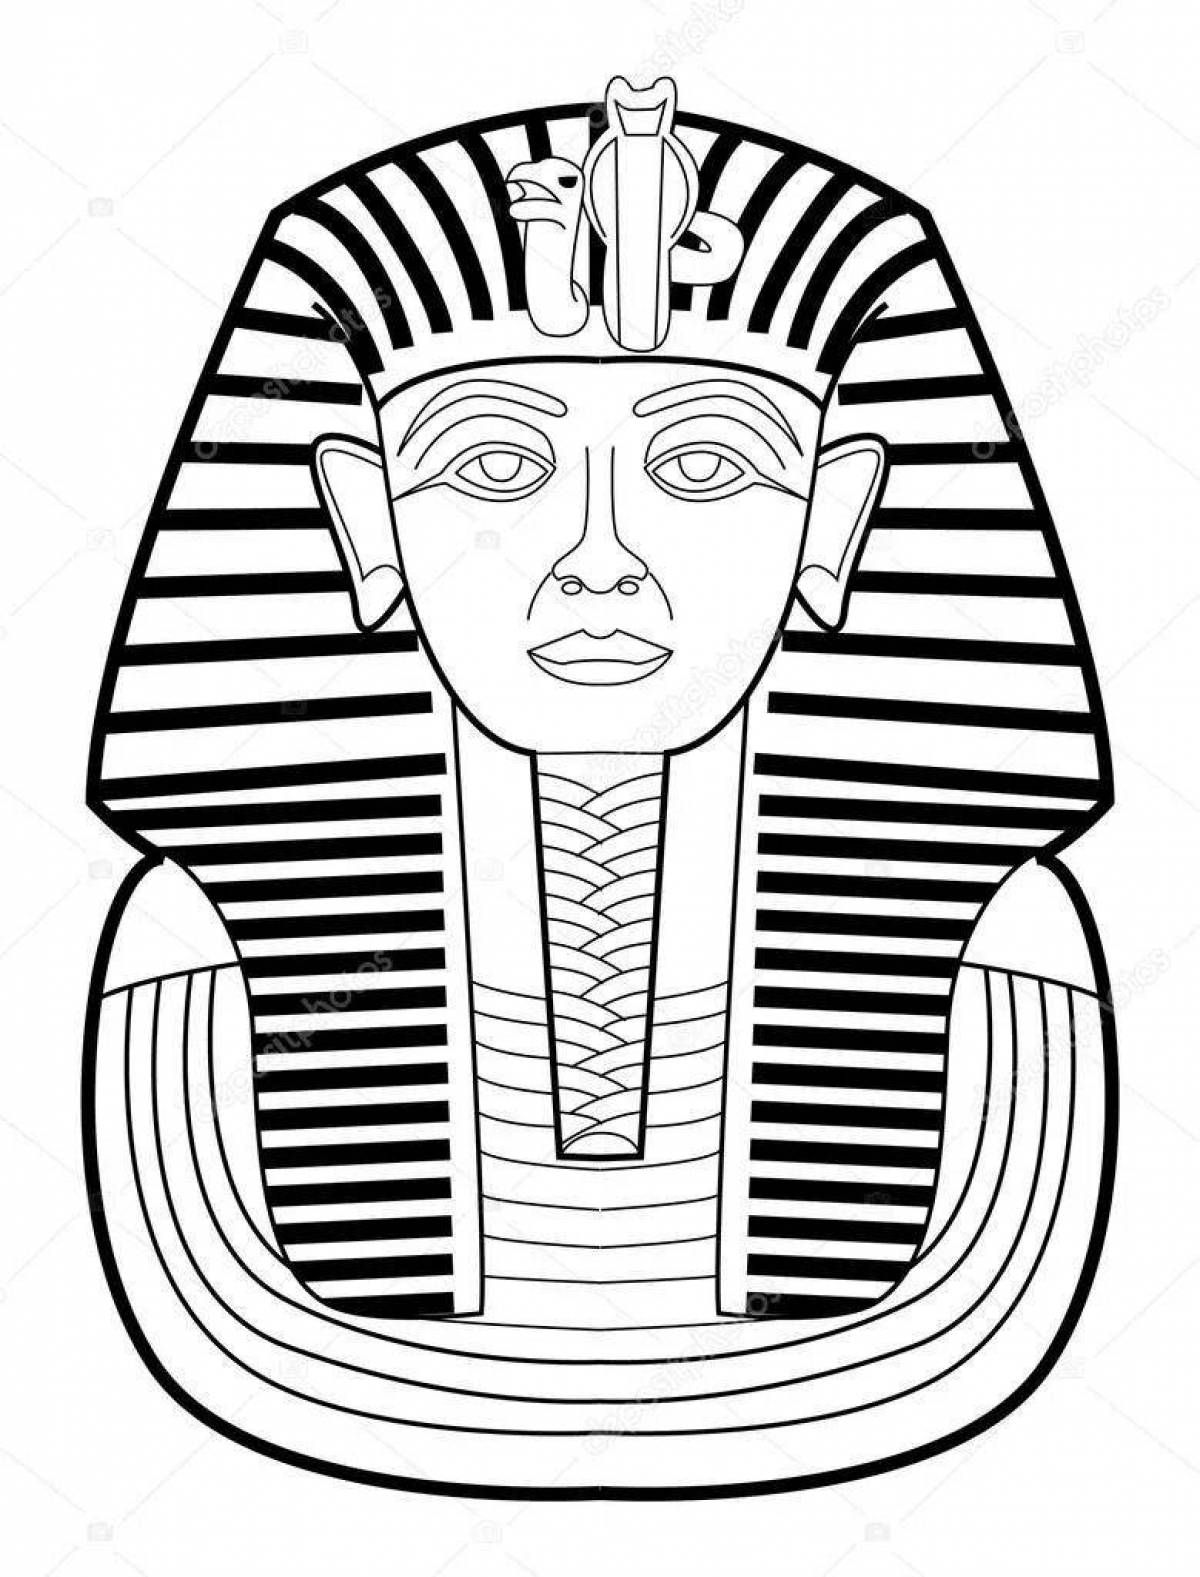 Раскраска великолепная маска фараона тутанхамона